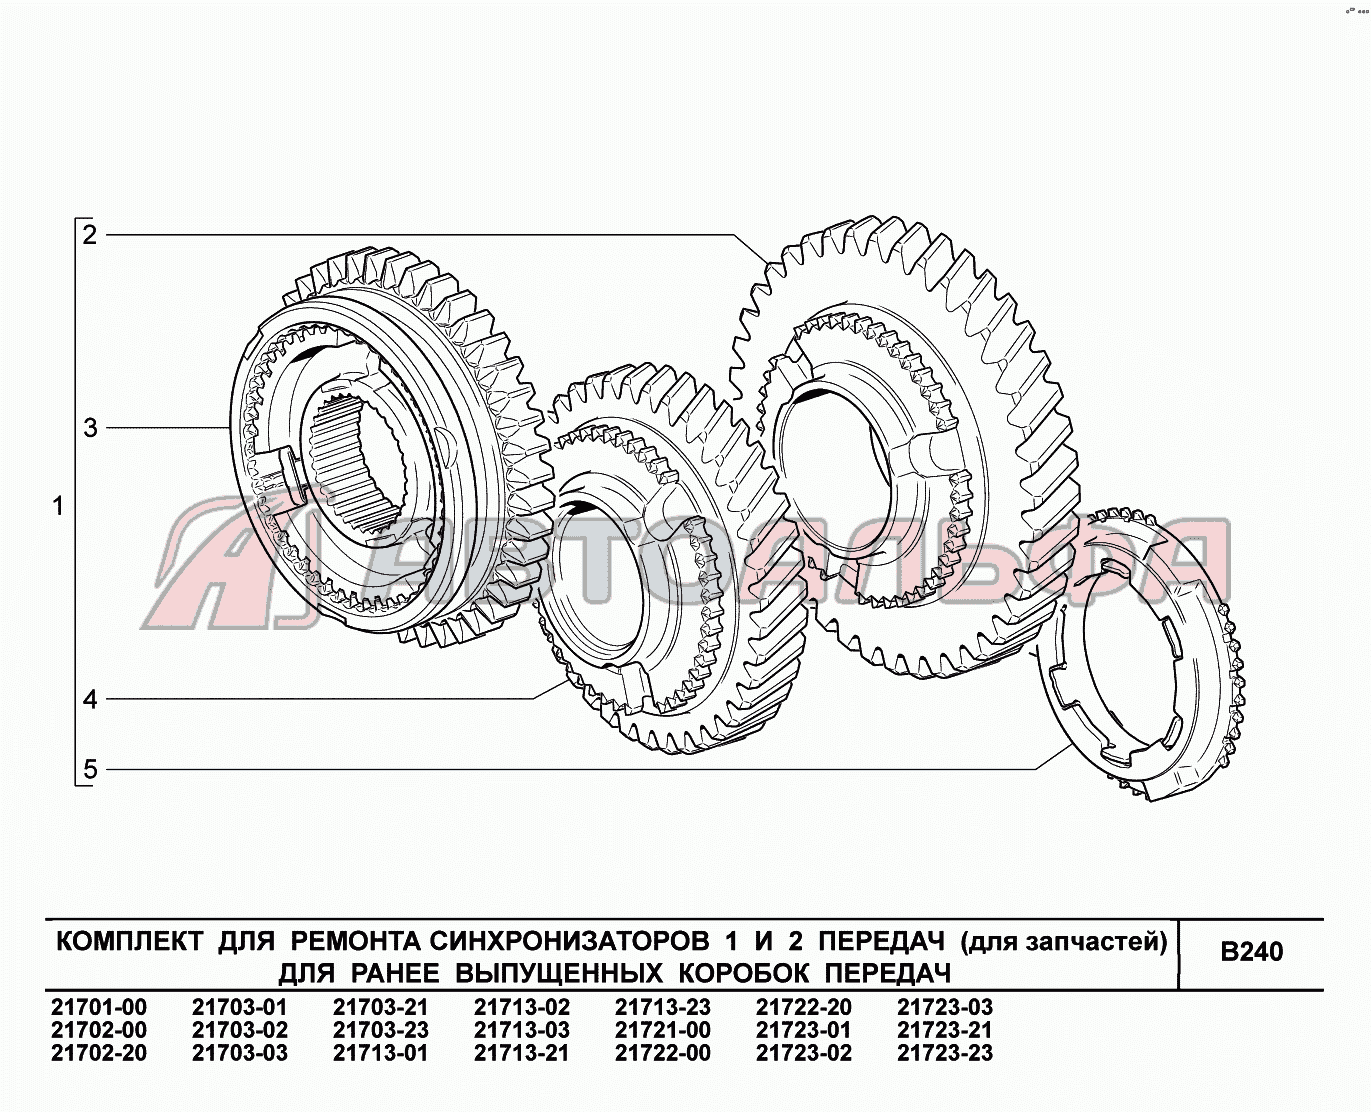 B240. Комплект для ремонта синхронизаторов 1 и 2 передач LADA Priora (ВАЗ 2170), каталог 2013 г.